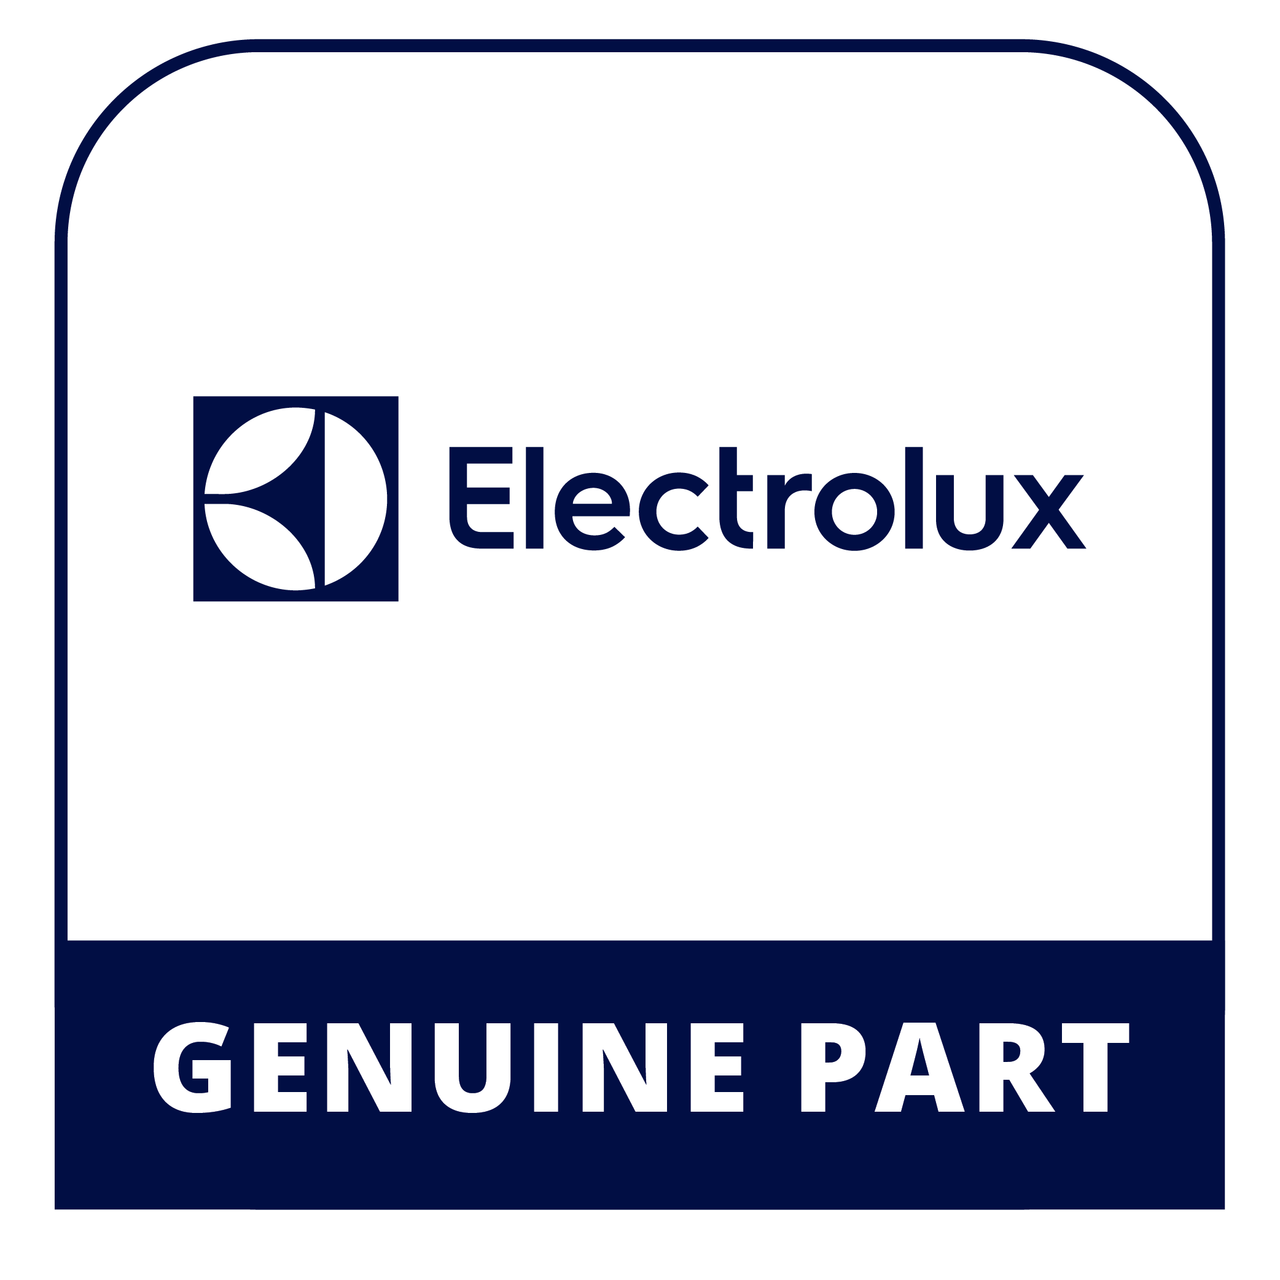 Frigidaire - Electrolux 5304497439 Control Panel Assy - Genuine Electrolux Part